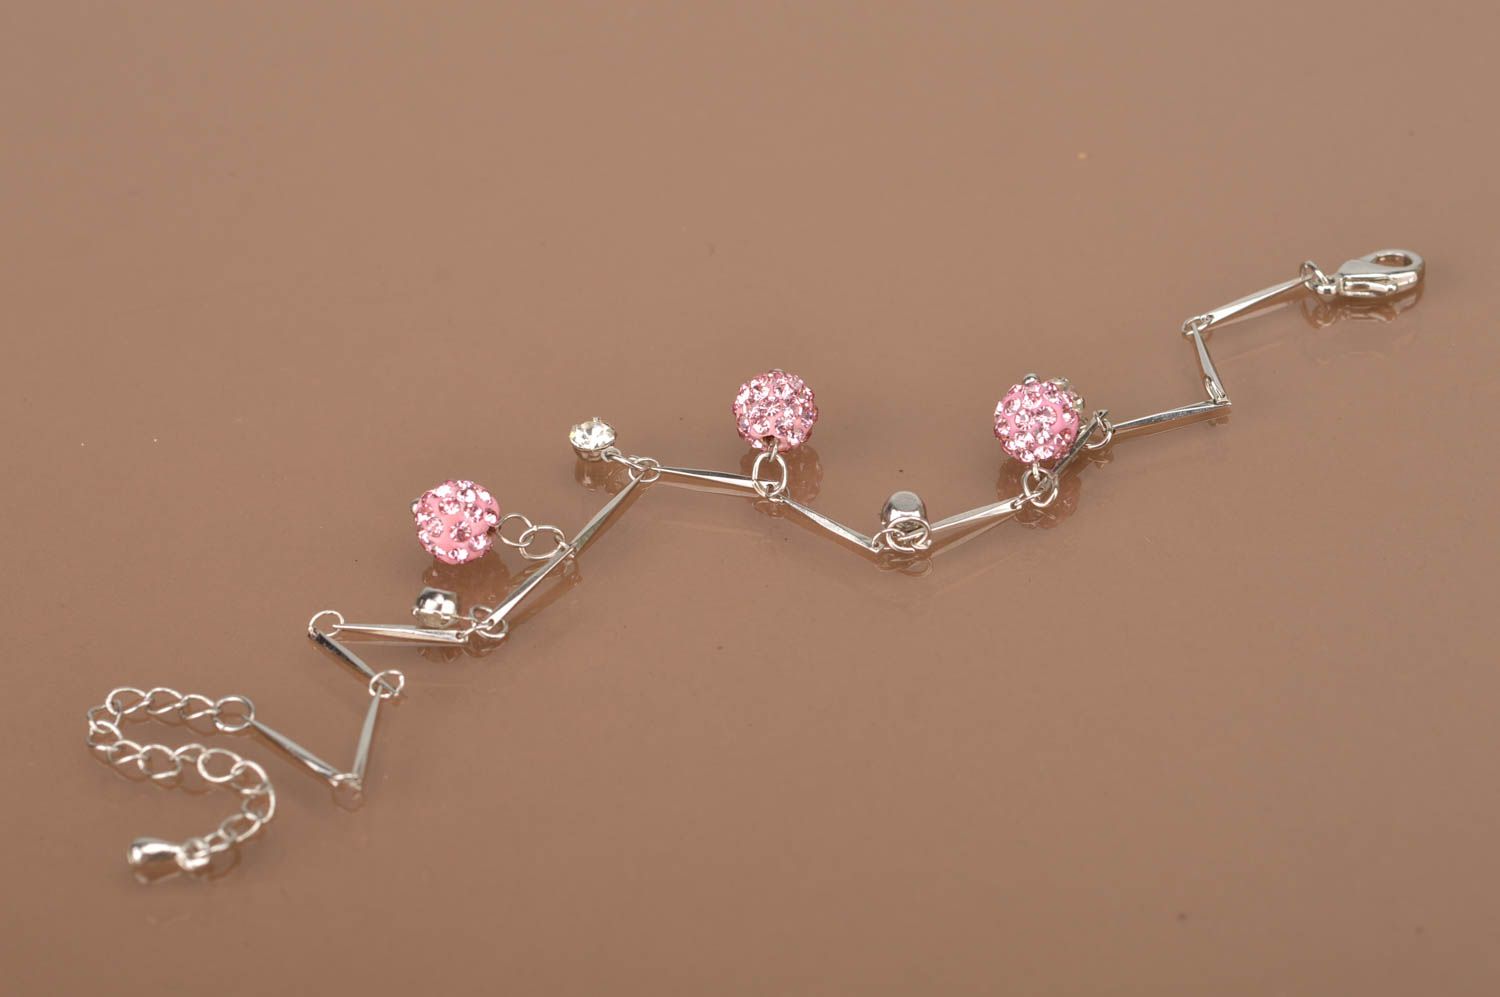 Metal bracelet handmade jewelry charm bracelet designer accessories gift for her photo 5